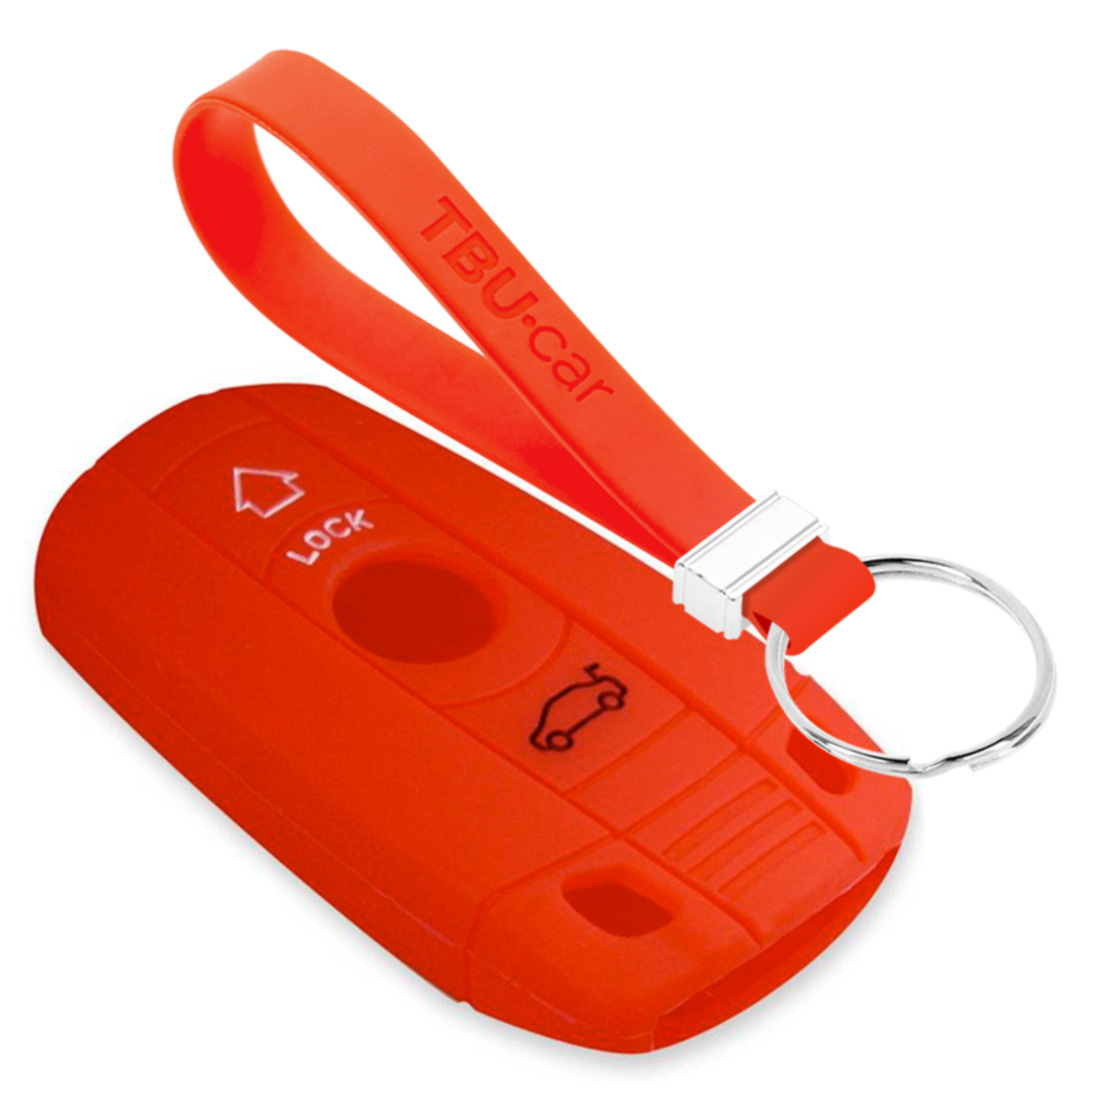 TBU car TBU car Autoschlüssel Hülle kompatibel mit BMW 3 Tasten (Keyless Entry) - Schutzhülle aus Silikon - Auto Schlüsselhülle Cover in Rot